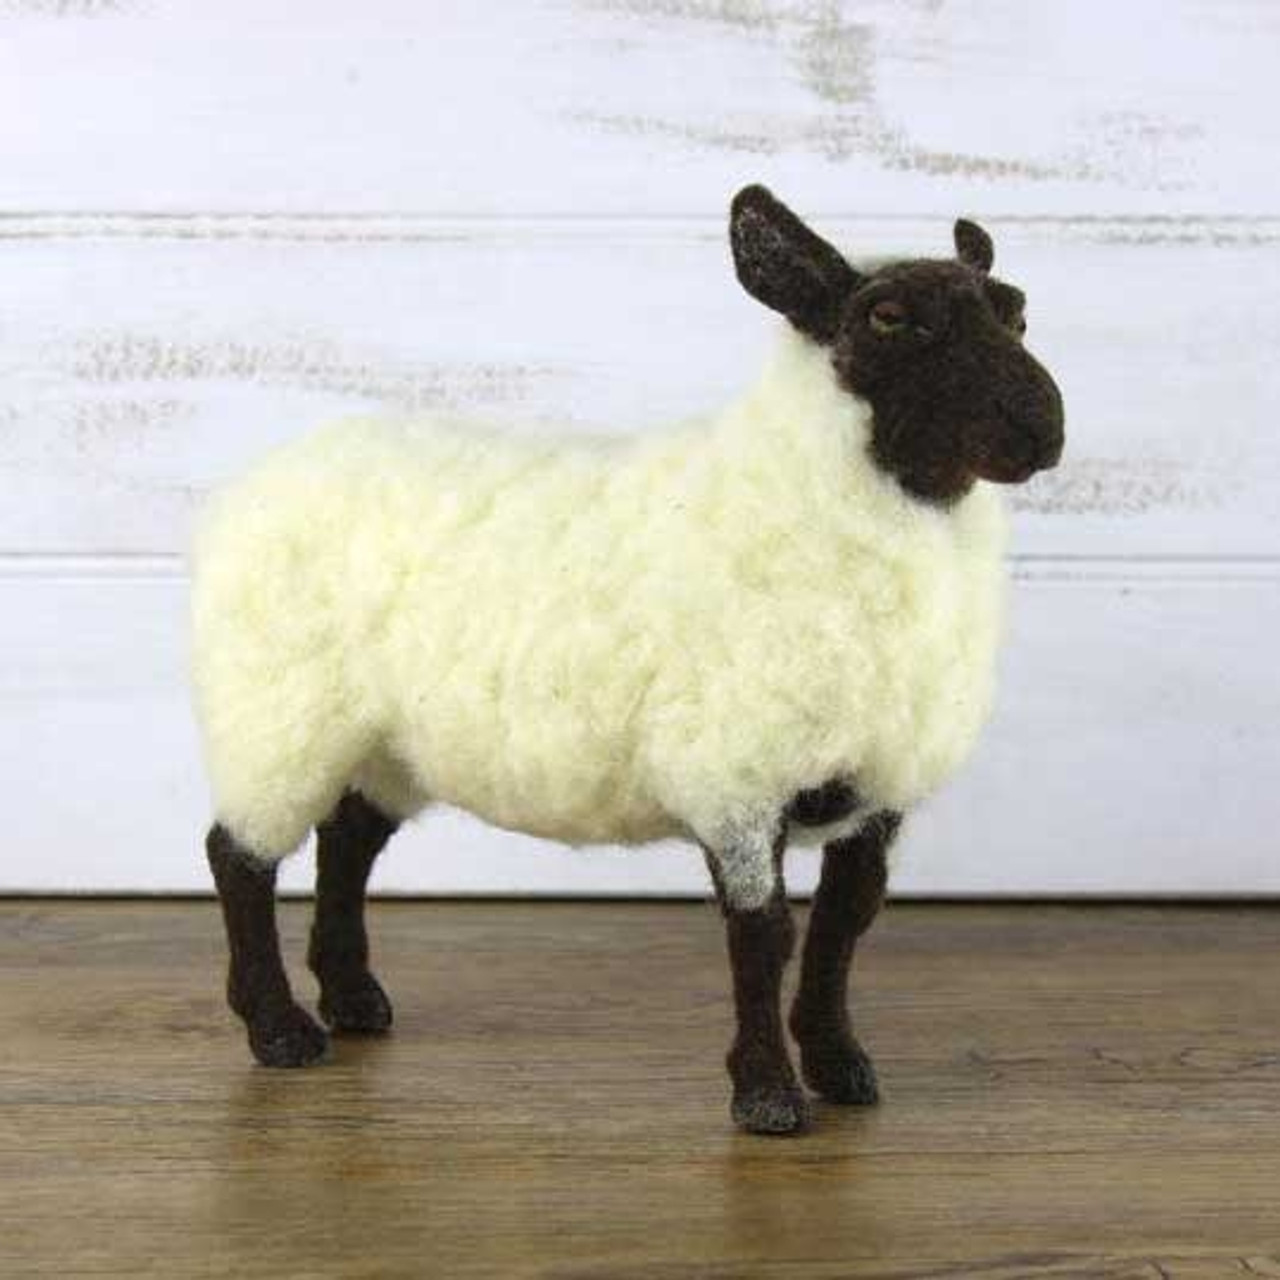 World of Wool Felting Kit - Sheldon the Sheep